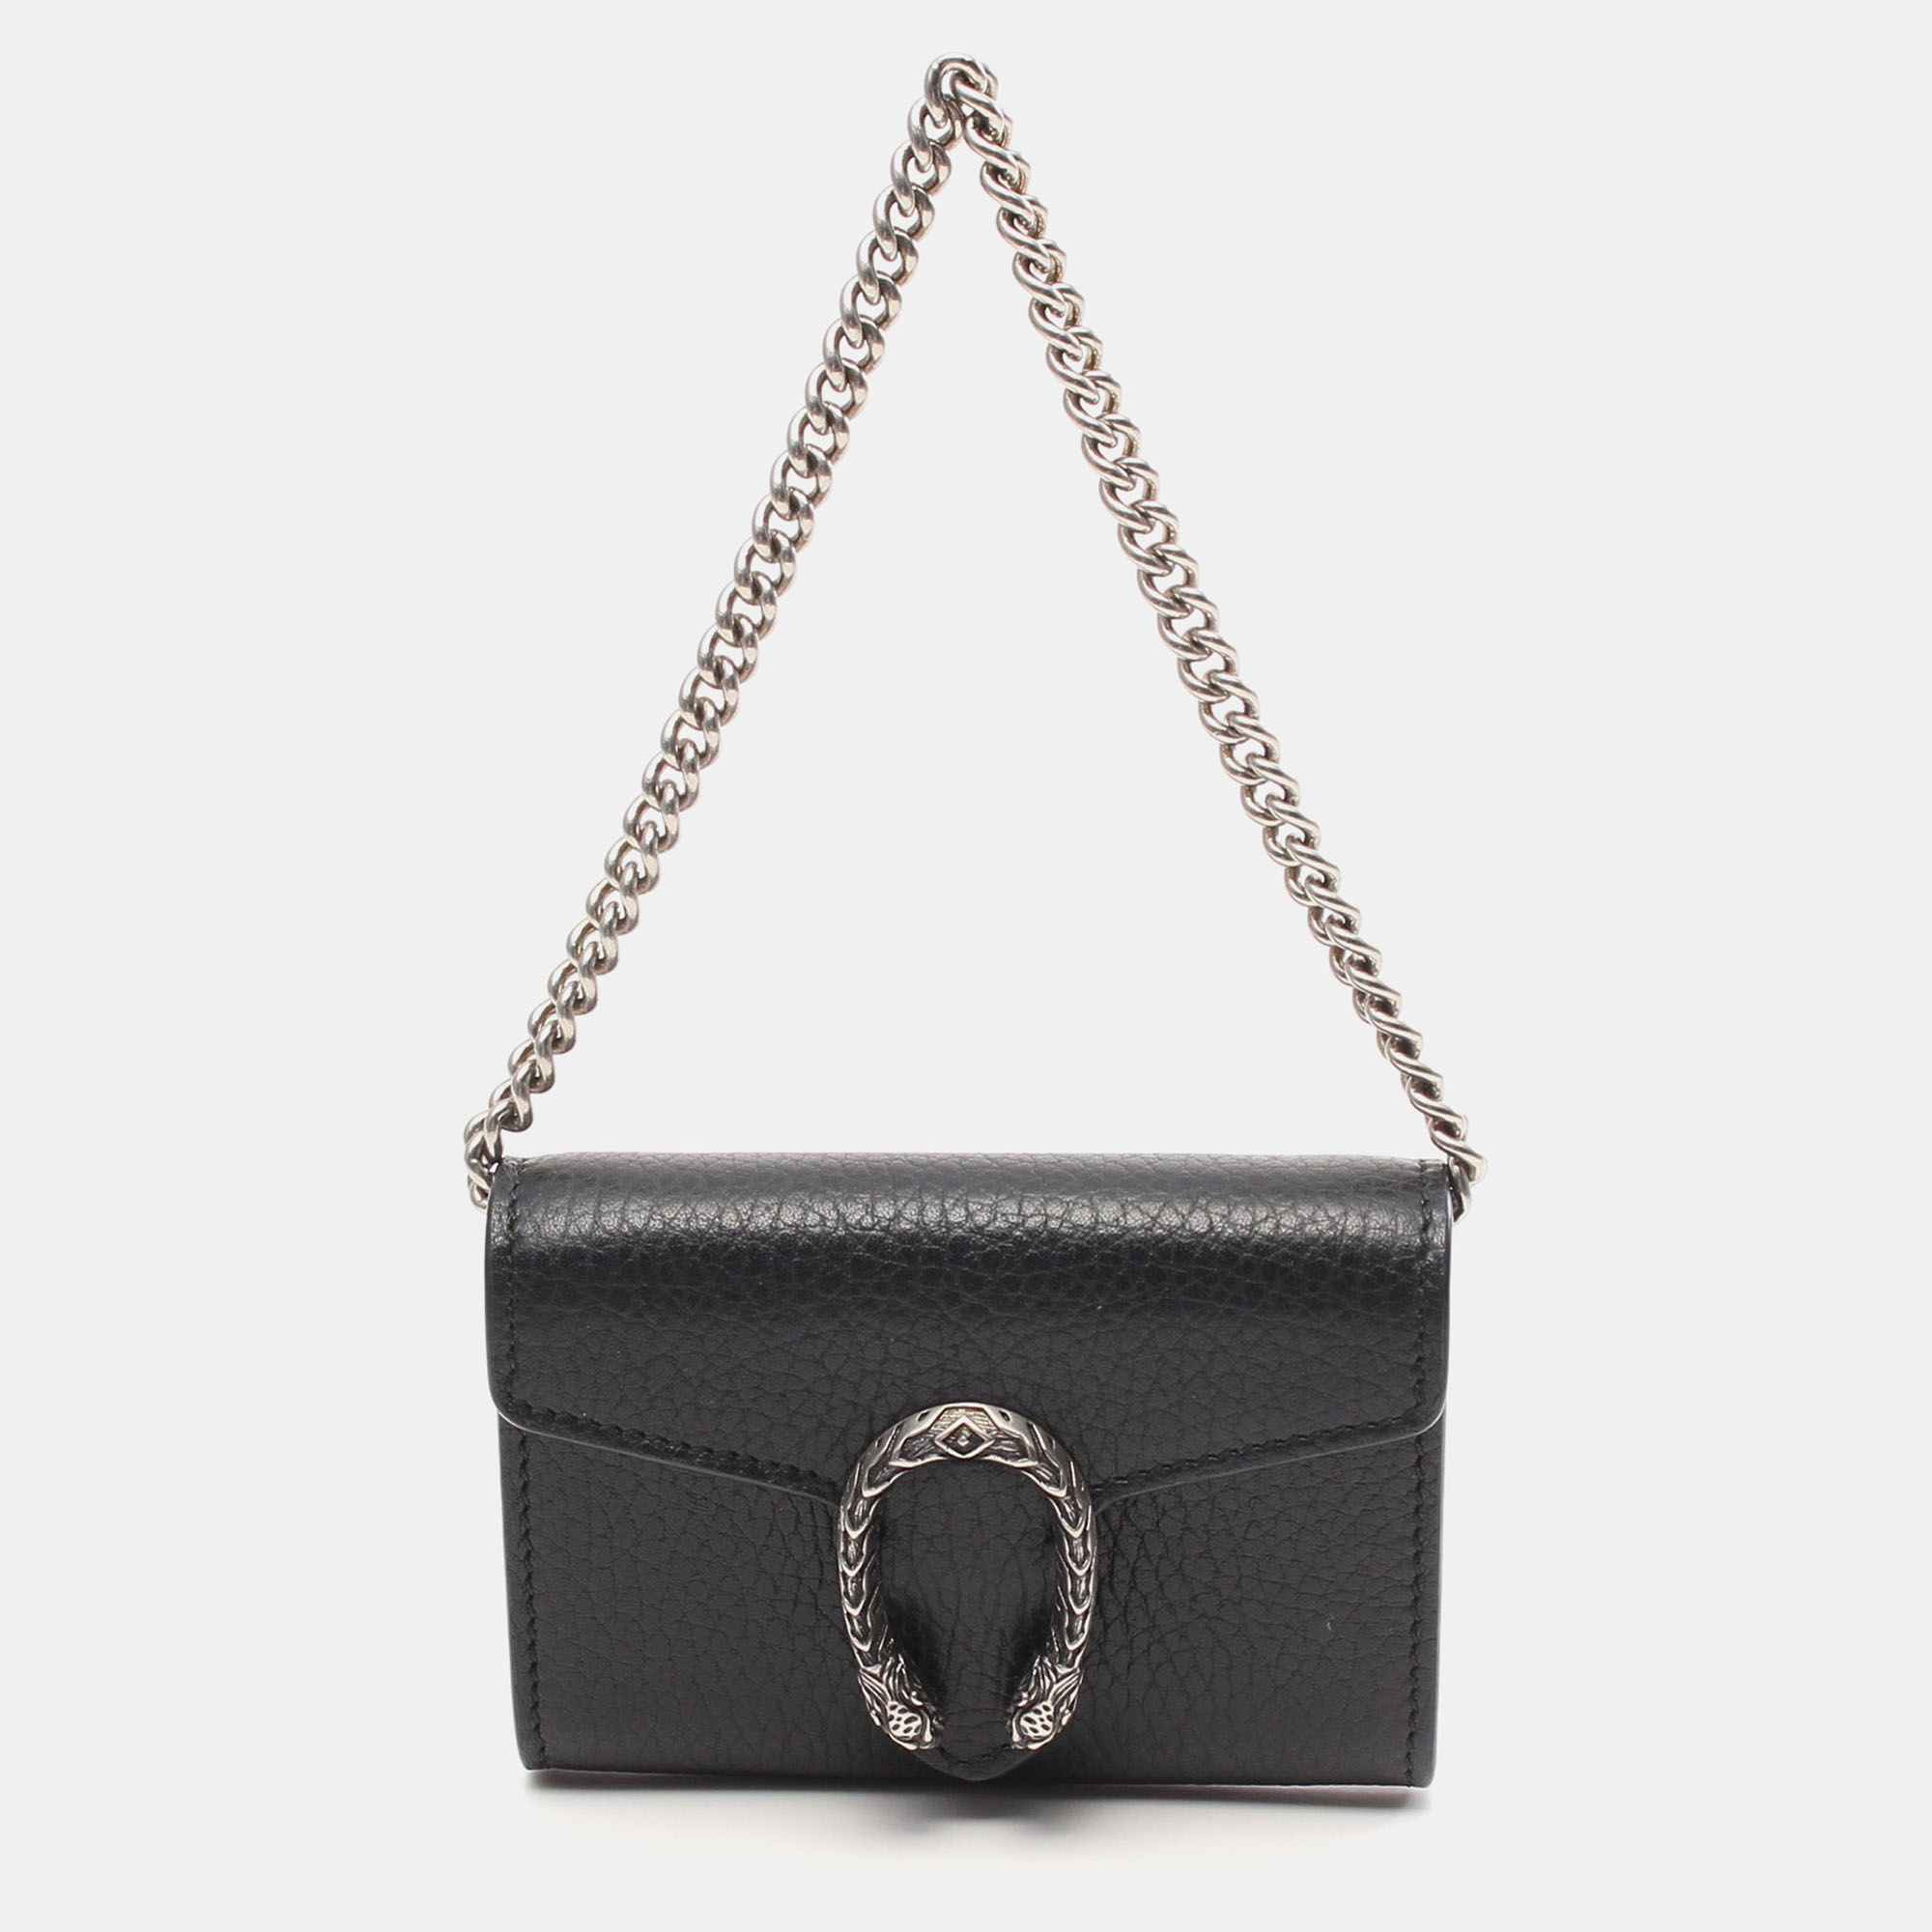 Gucci dionysus chain coin purse coin purse leather black